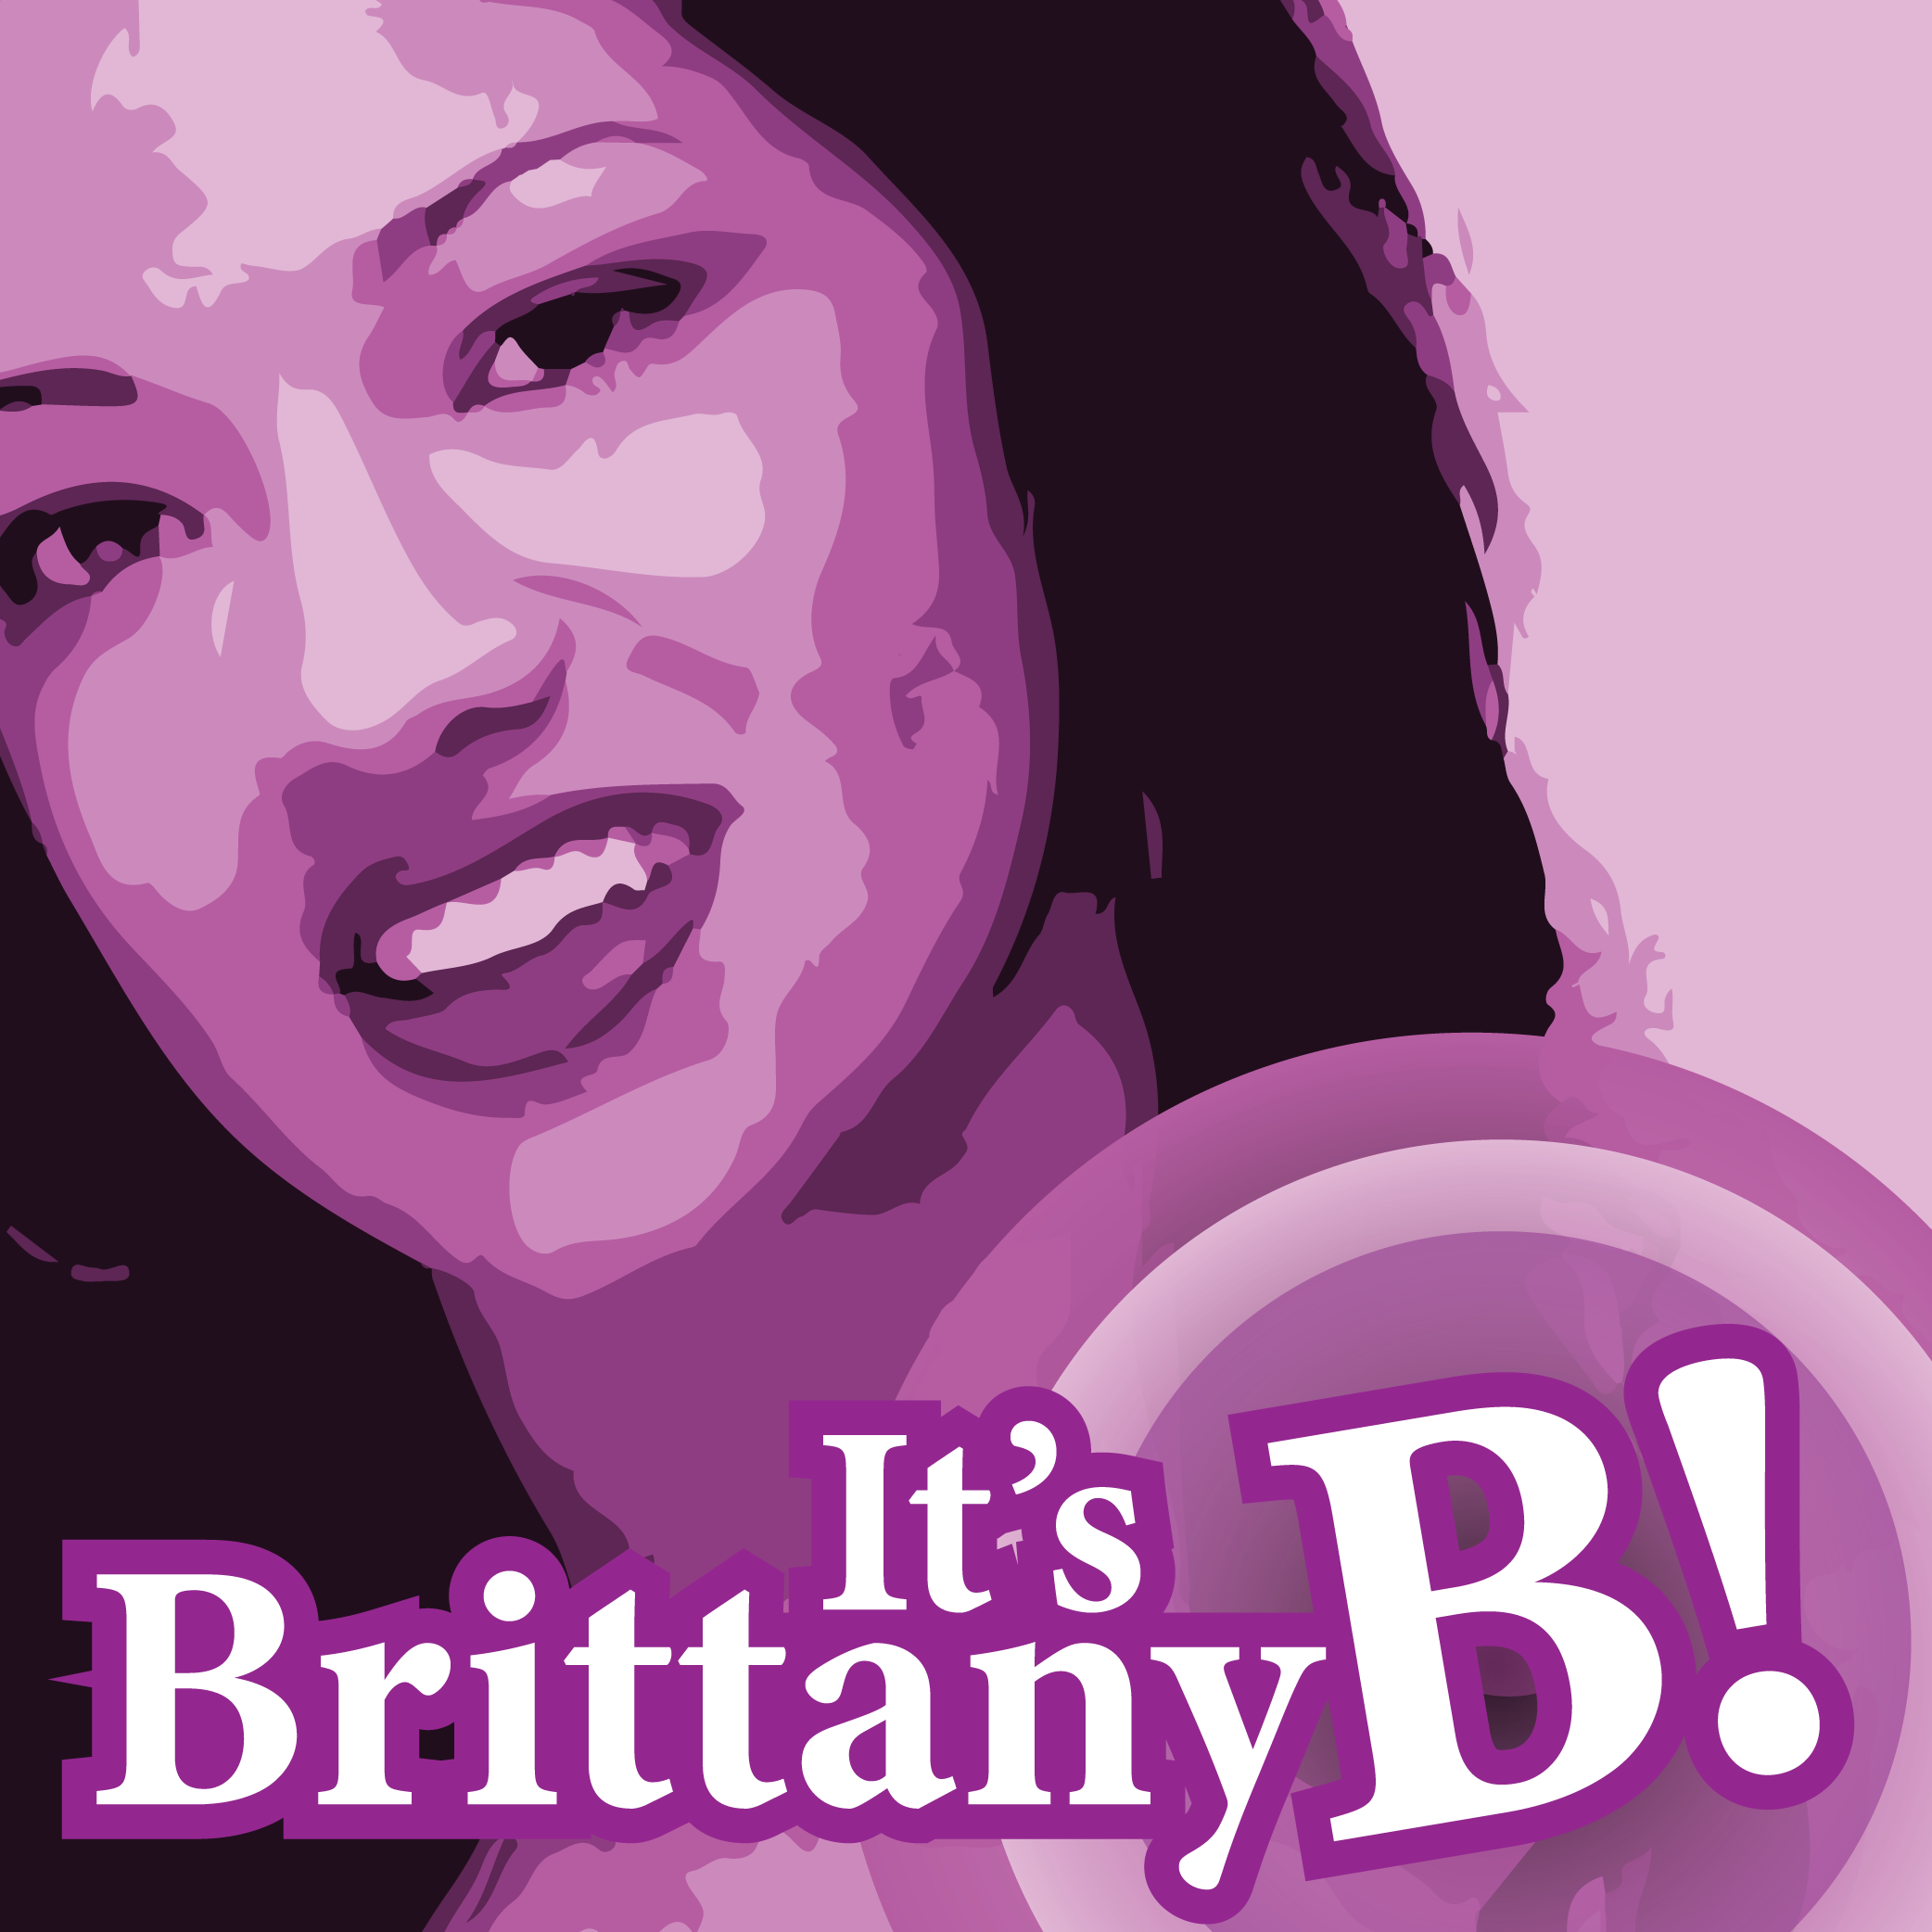 It's Brittany B!